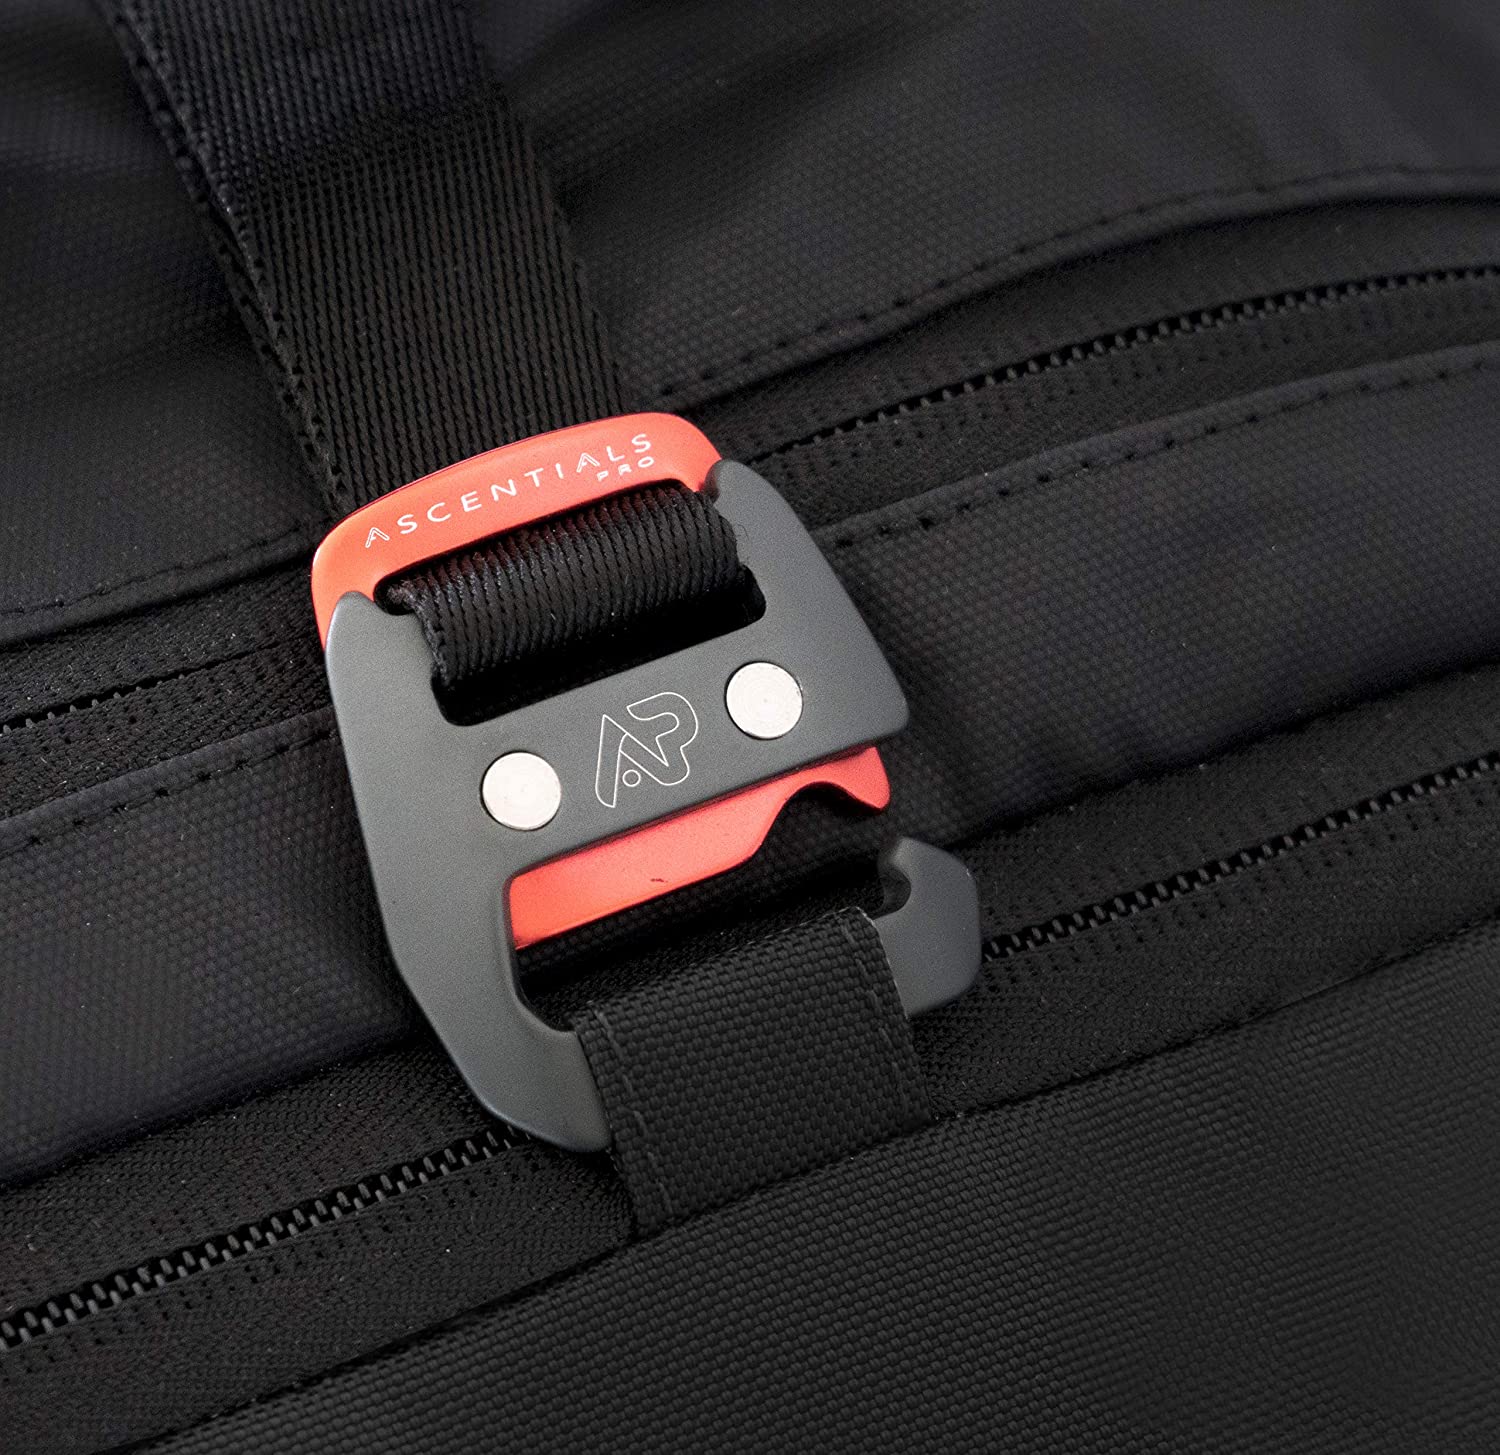 Ascentials Pro Fury Convertible Laptop Travel Backpack Duffel Bag ...